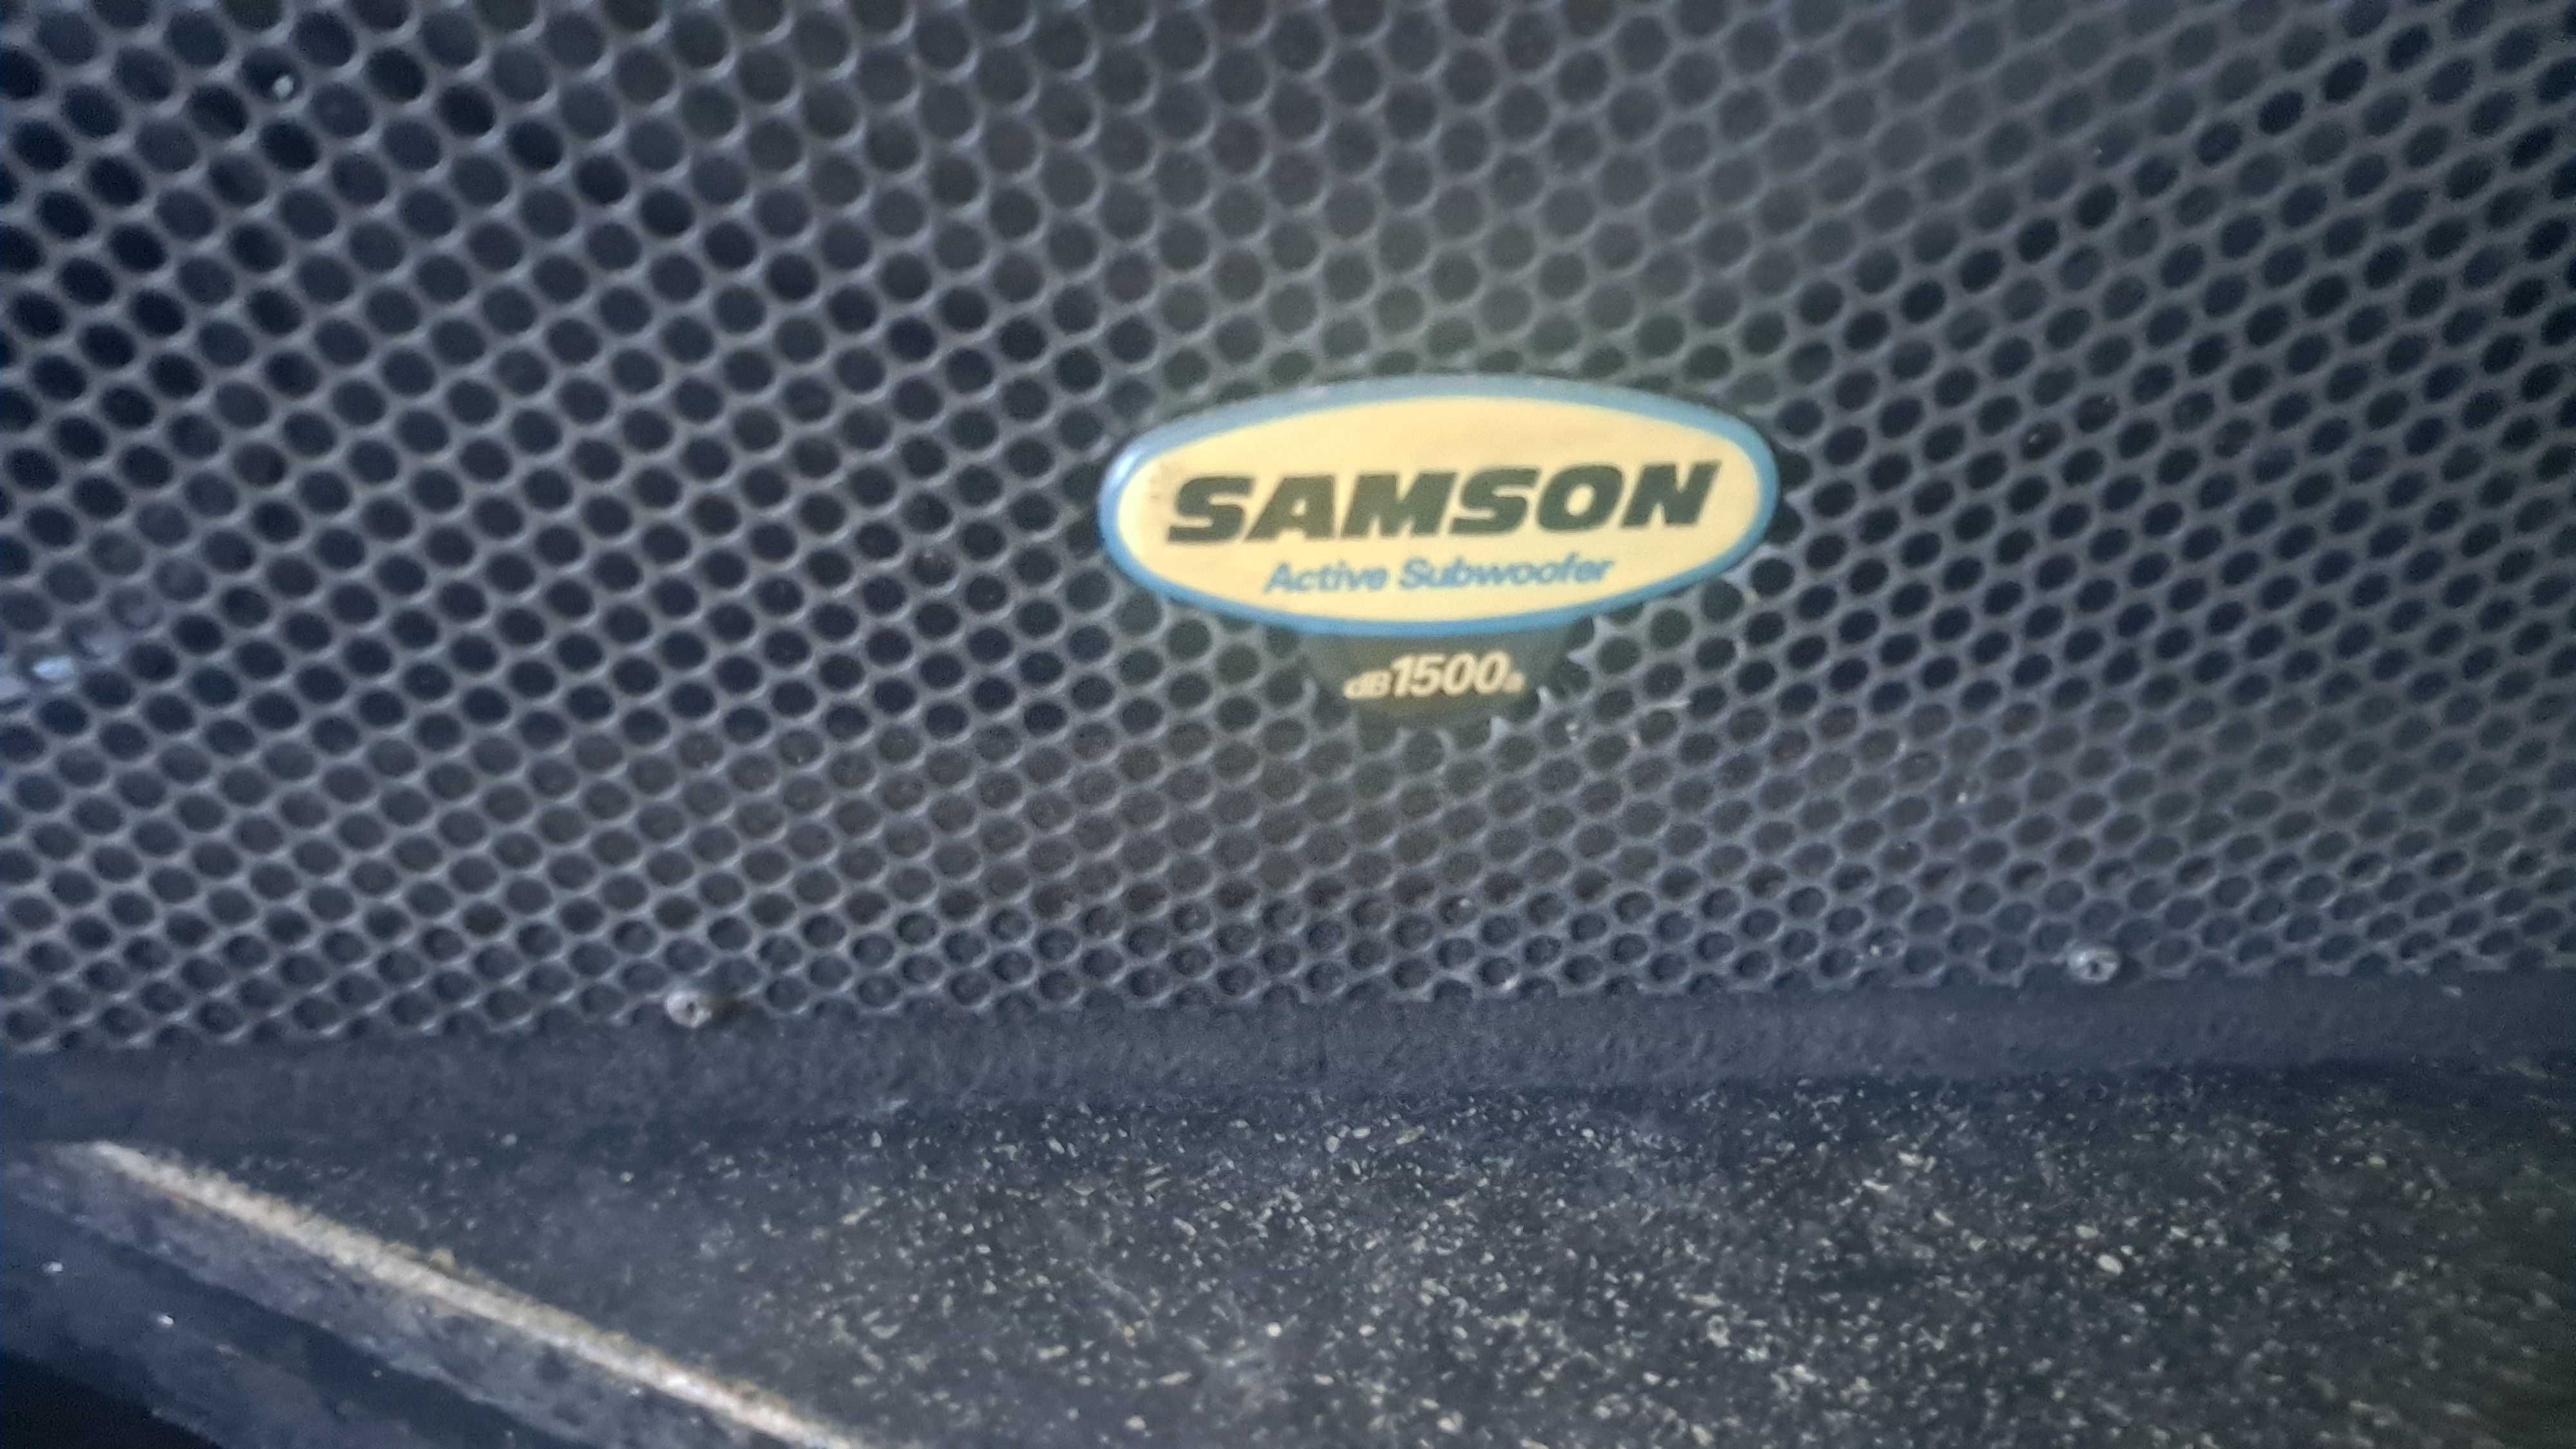 Sprzedam Subwoofer Samson db1500a